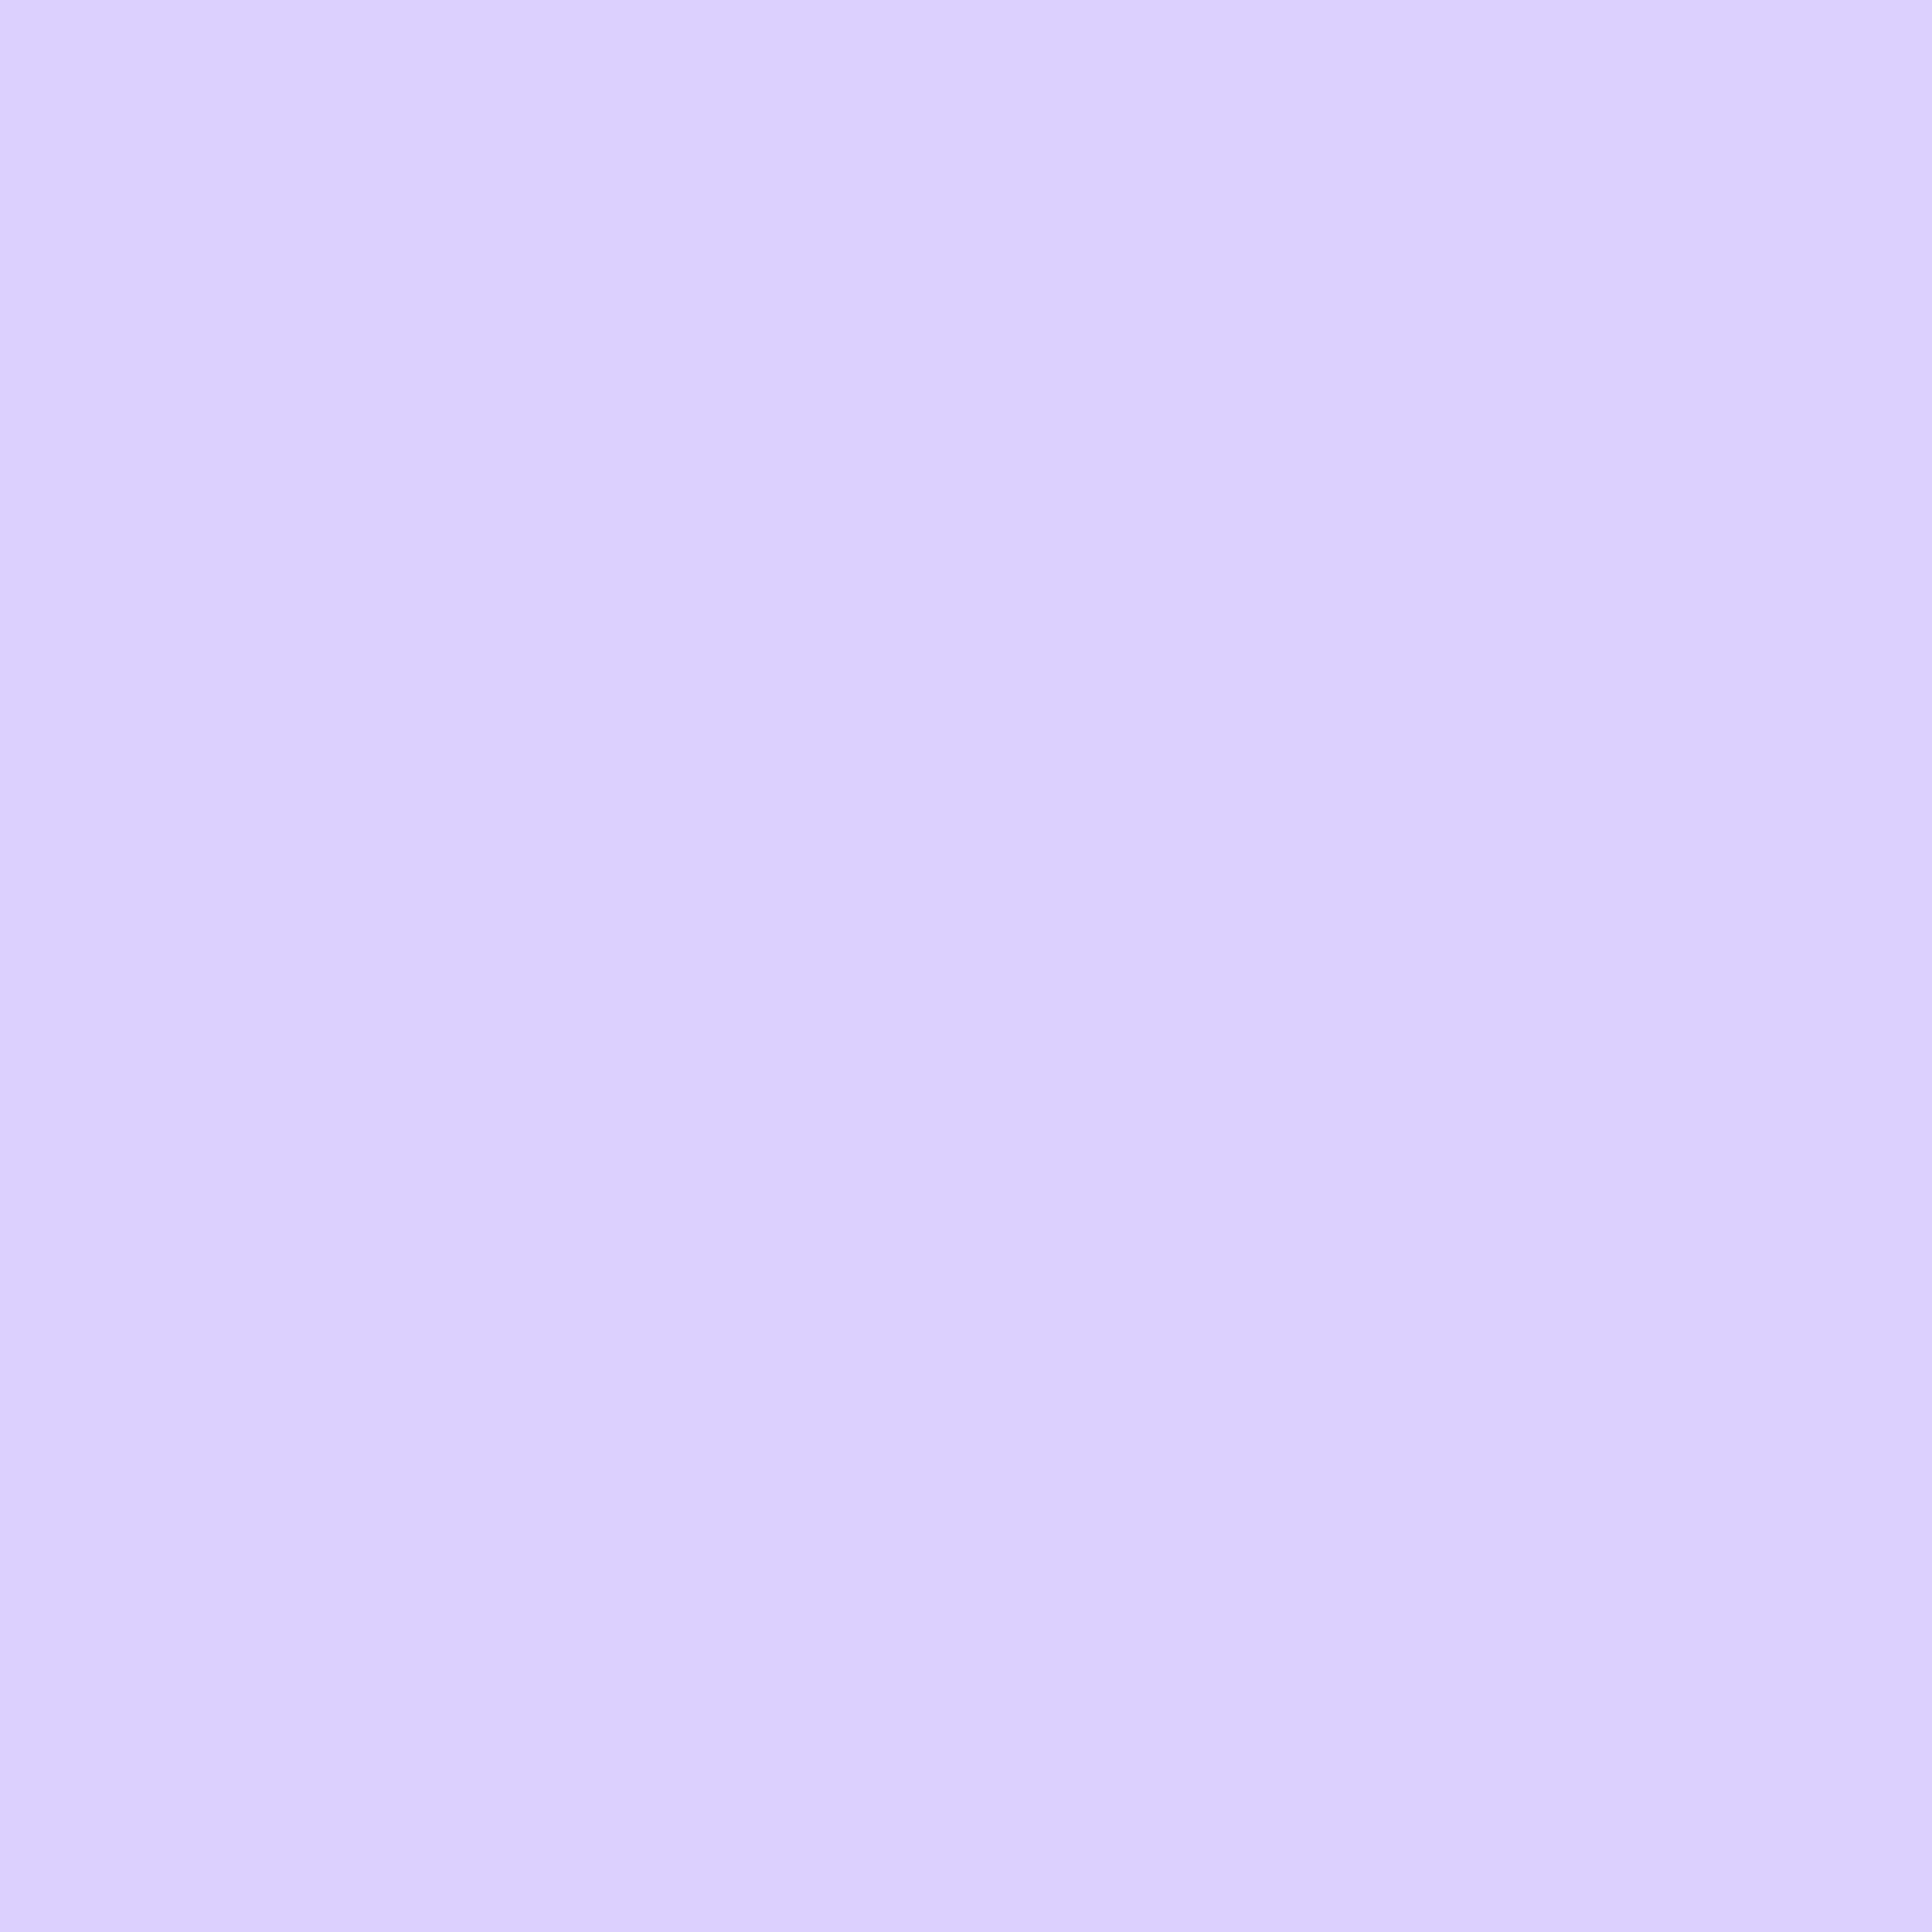 2732x2732 Pale Lavender Solid Color Background